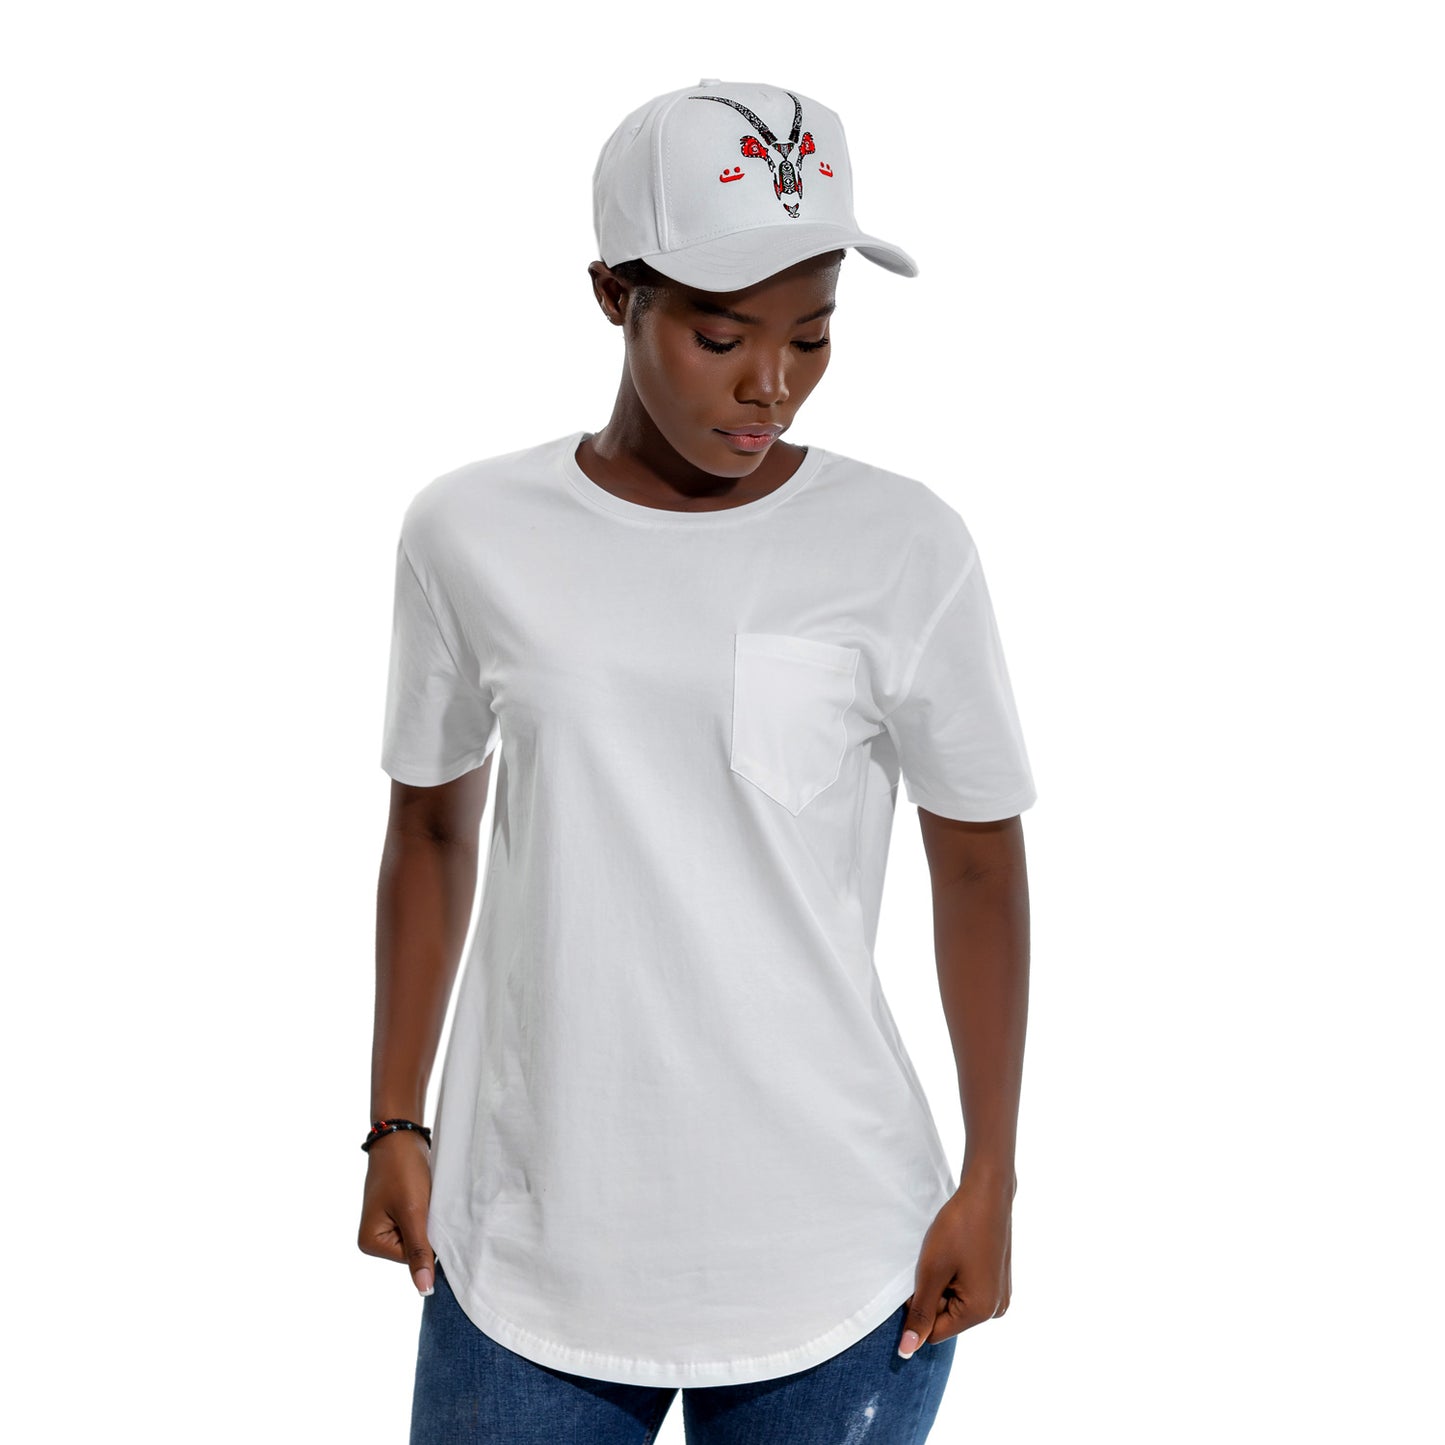 White baseball cap with Oryx embroidery al sadu HABB trucker cap for woman